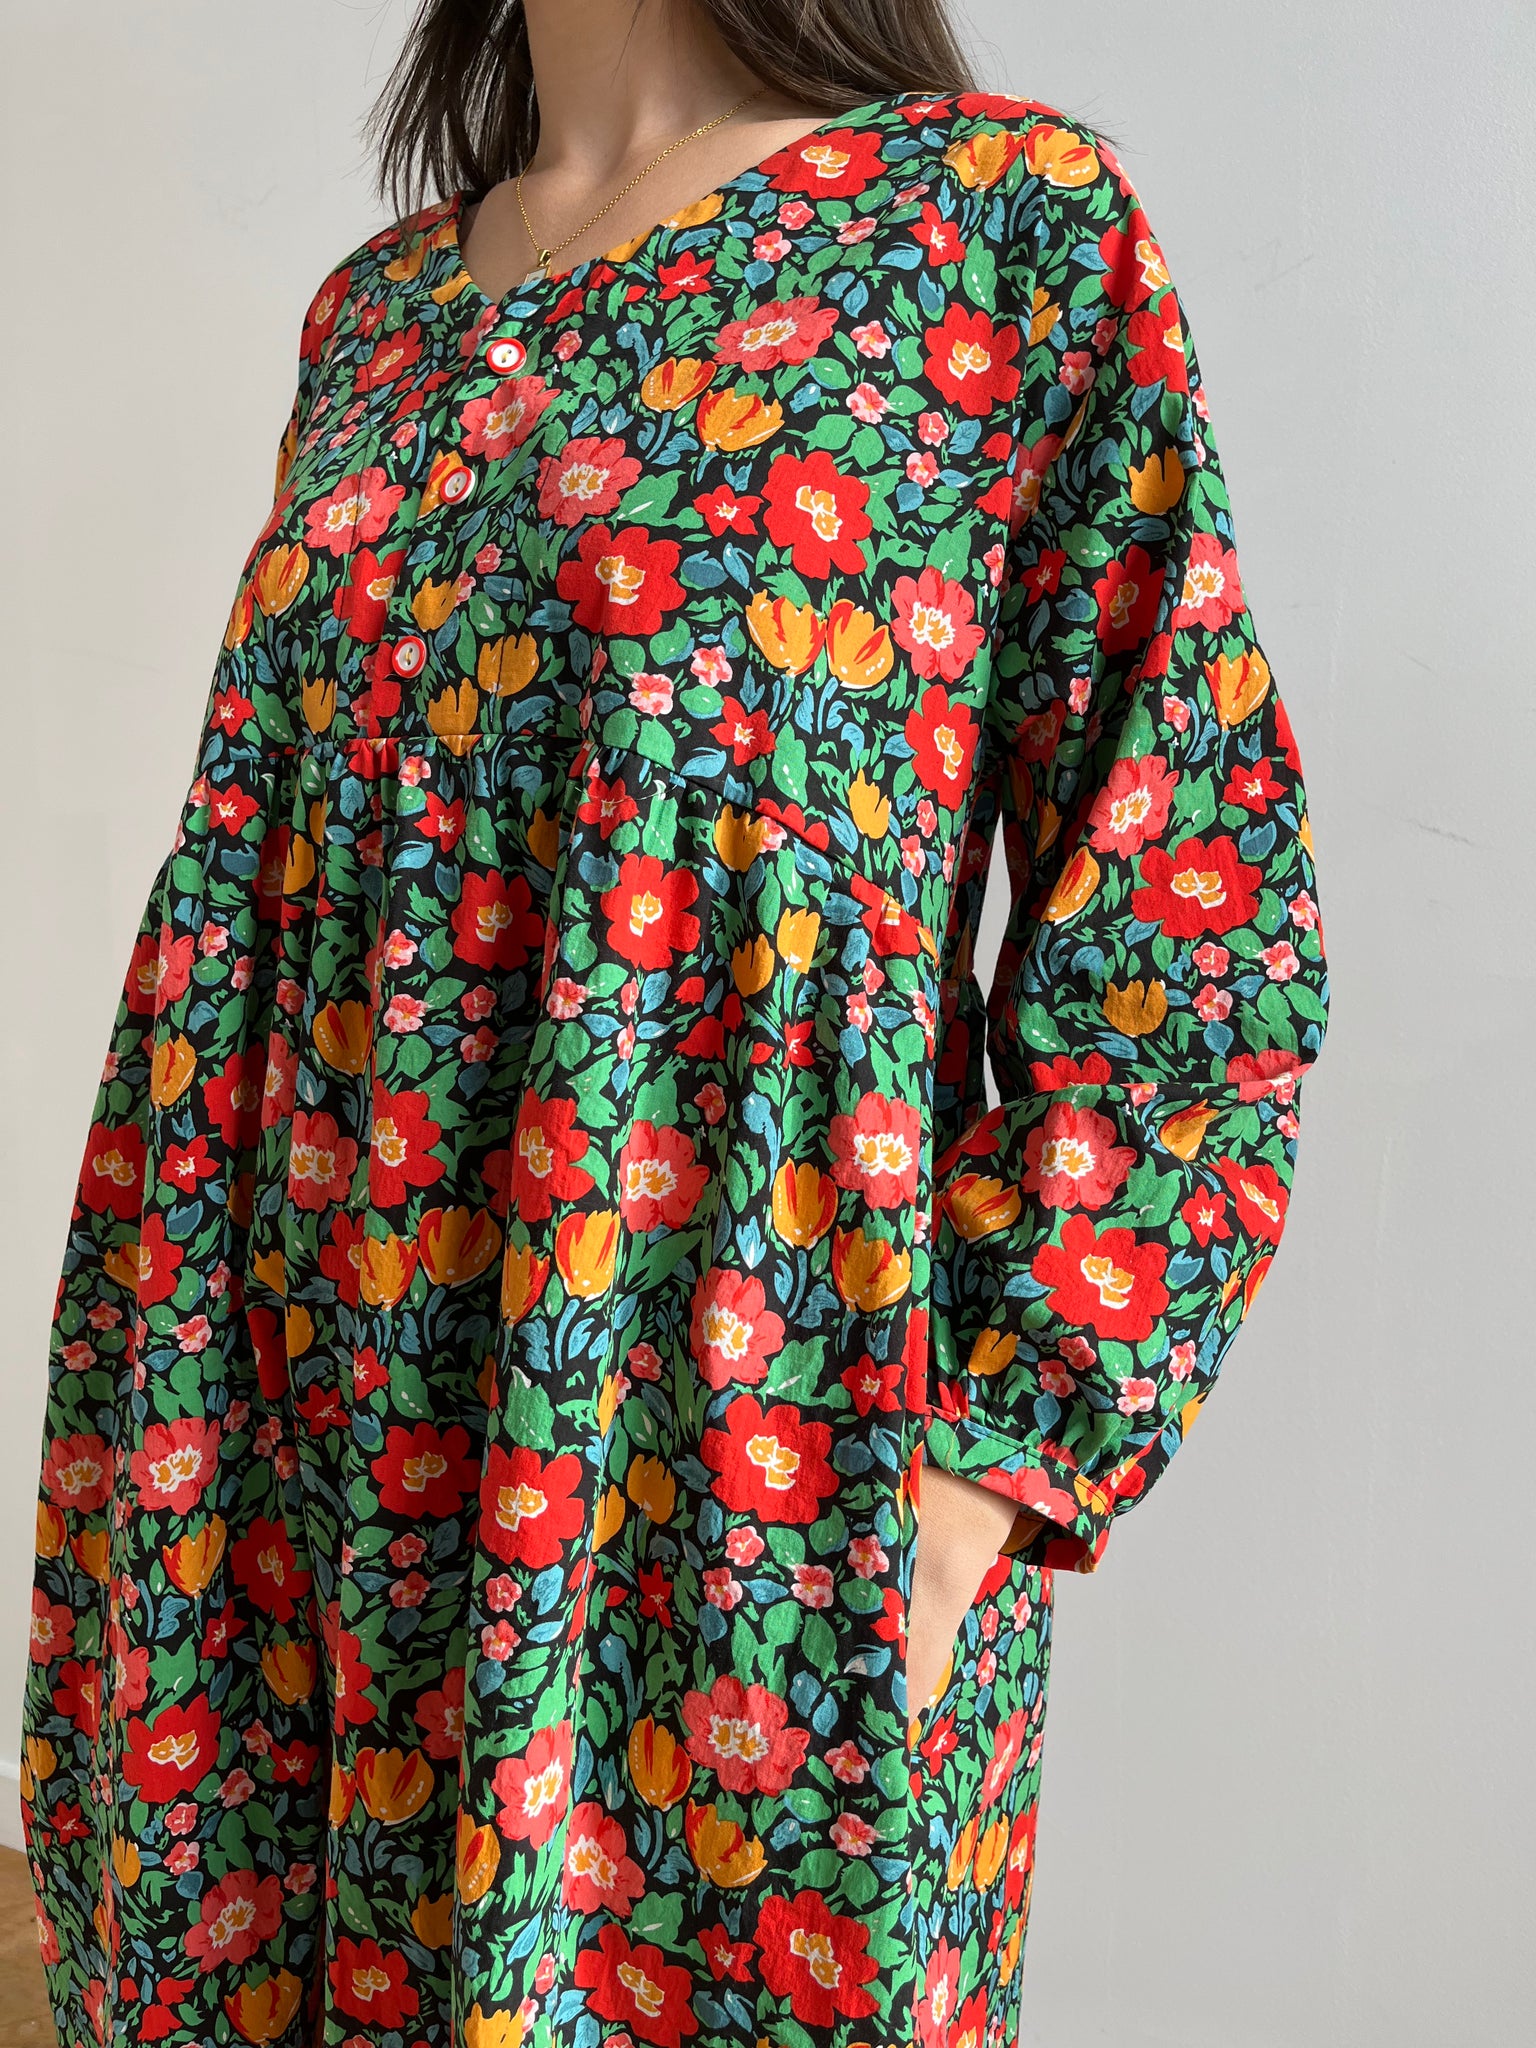 SAMPLE XS-M Wildflower dress